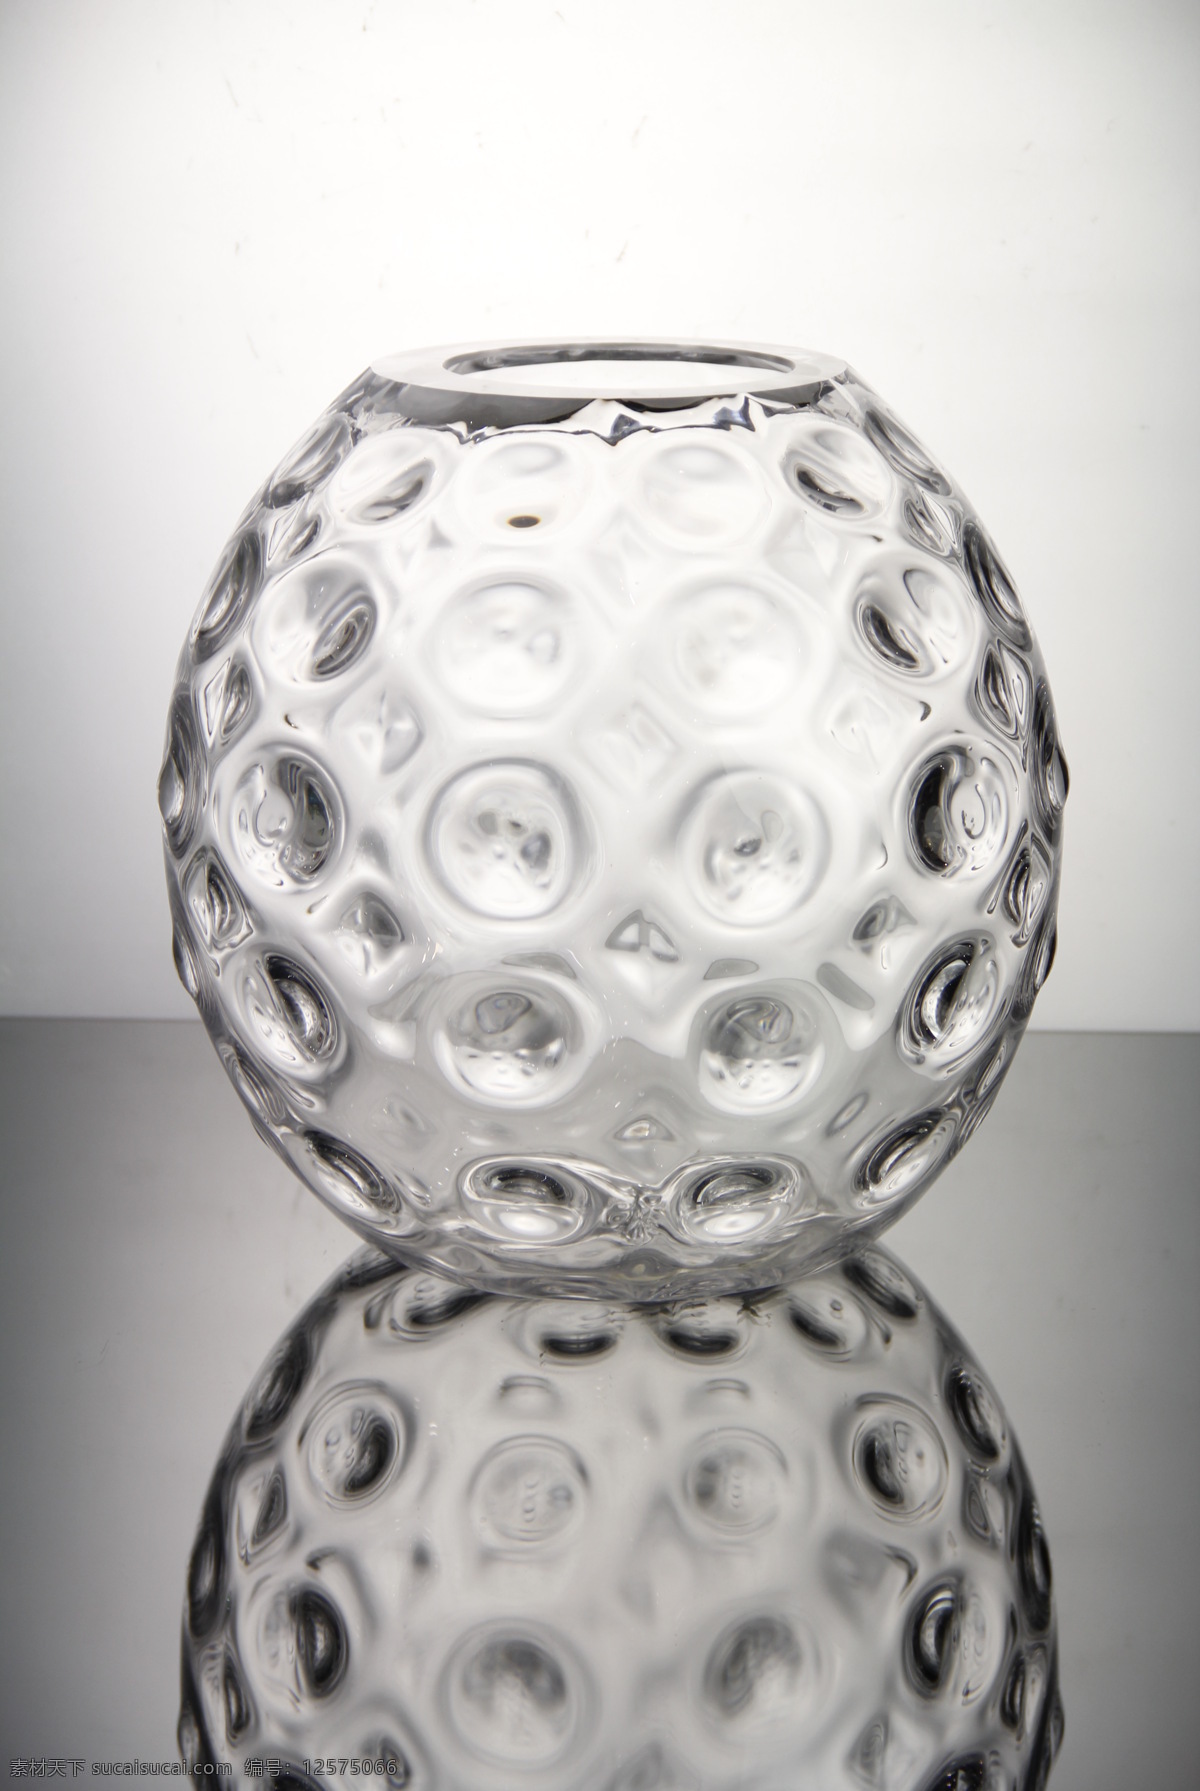 ivv花瓶 ivv 花瓶 透明 玻璃 工艺品 意大利玻璃 玻璃工艺品 文化艺术